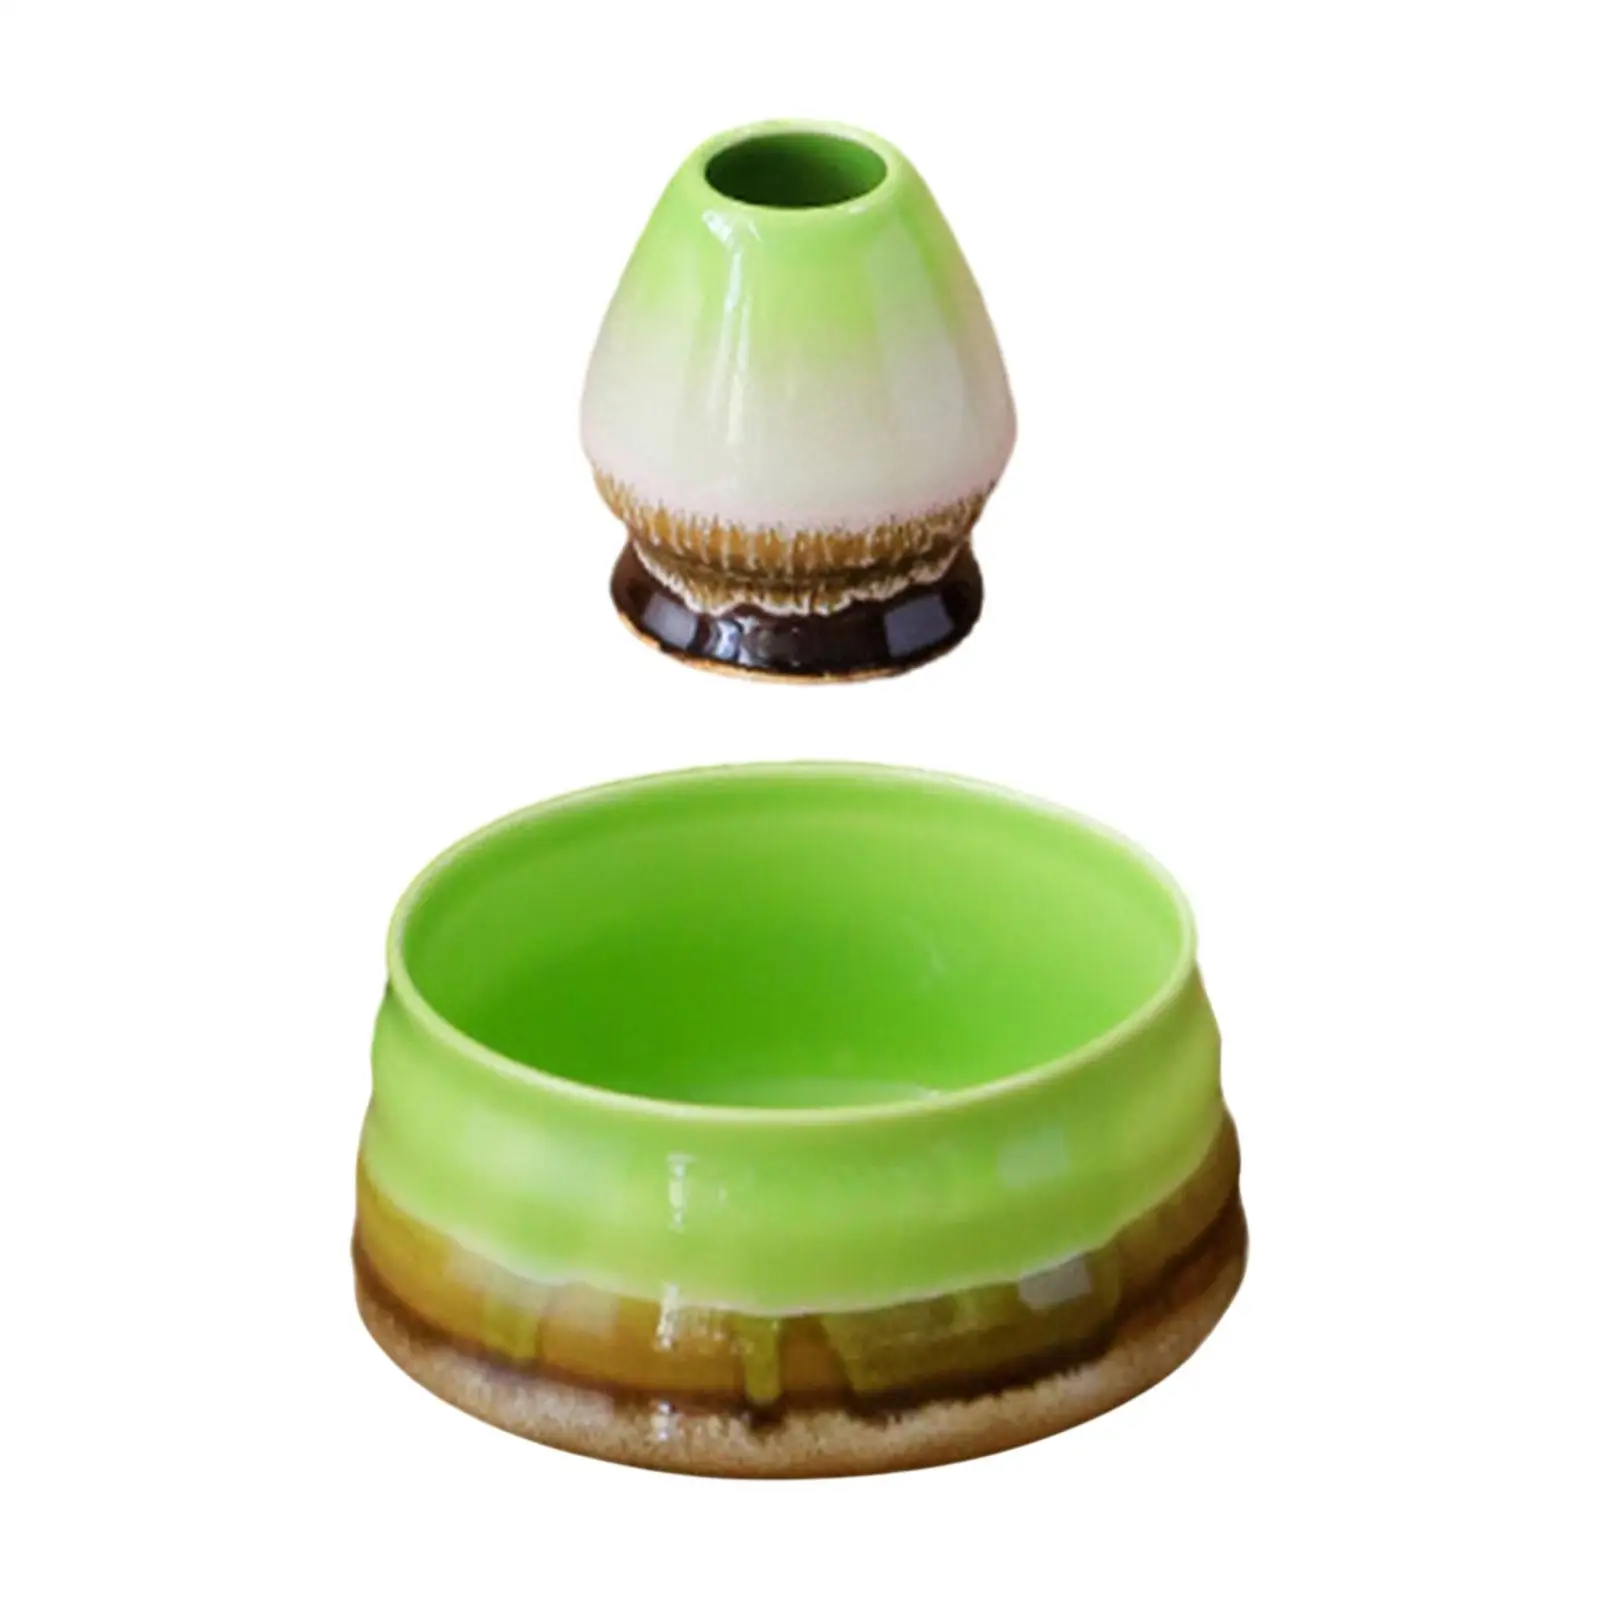 2 Pieces Whisk Tea Bowl and Whisk Holder Matcha Ceramic Bowl for Beginner Beverage Japanese Matcha Preparation Tea Lovers Matcha